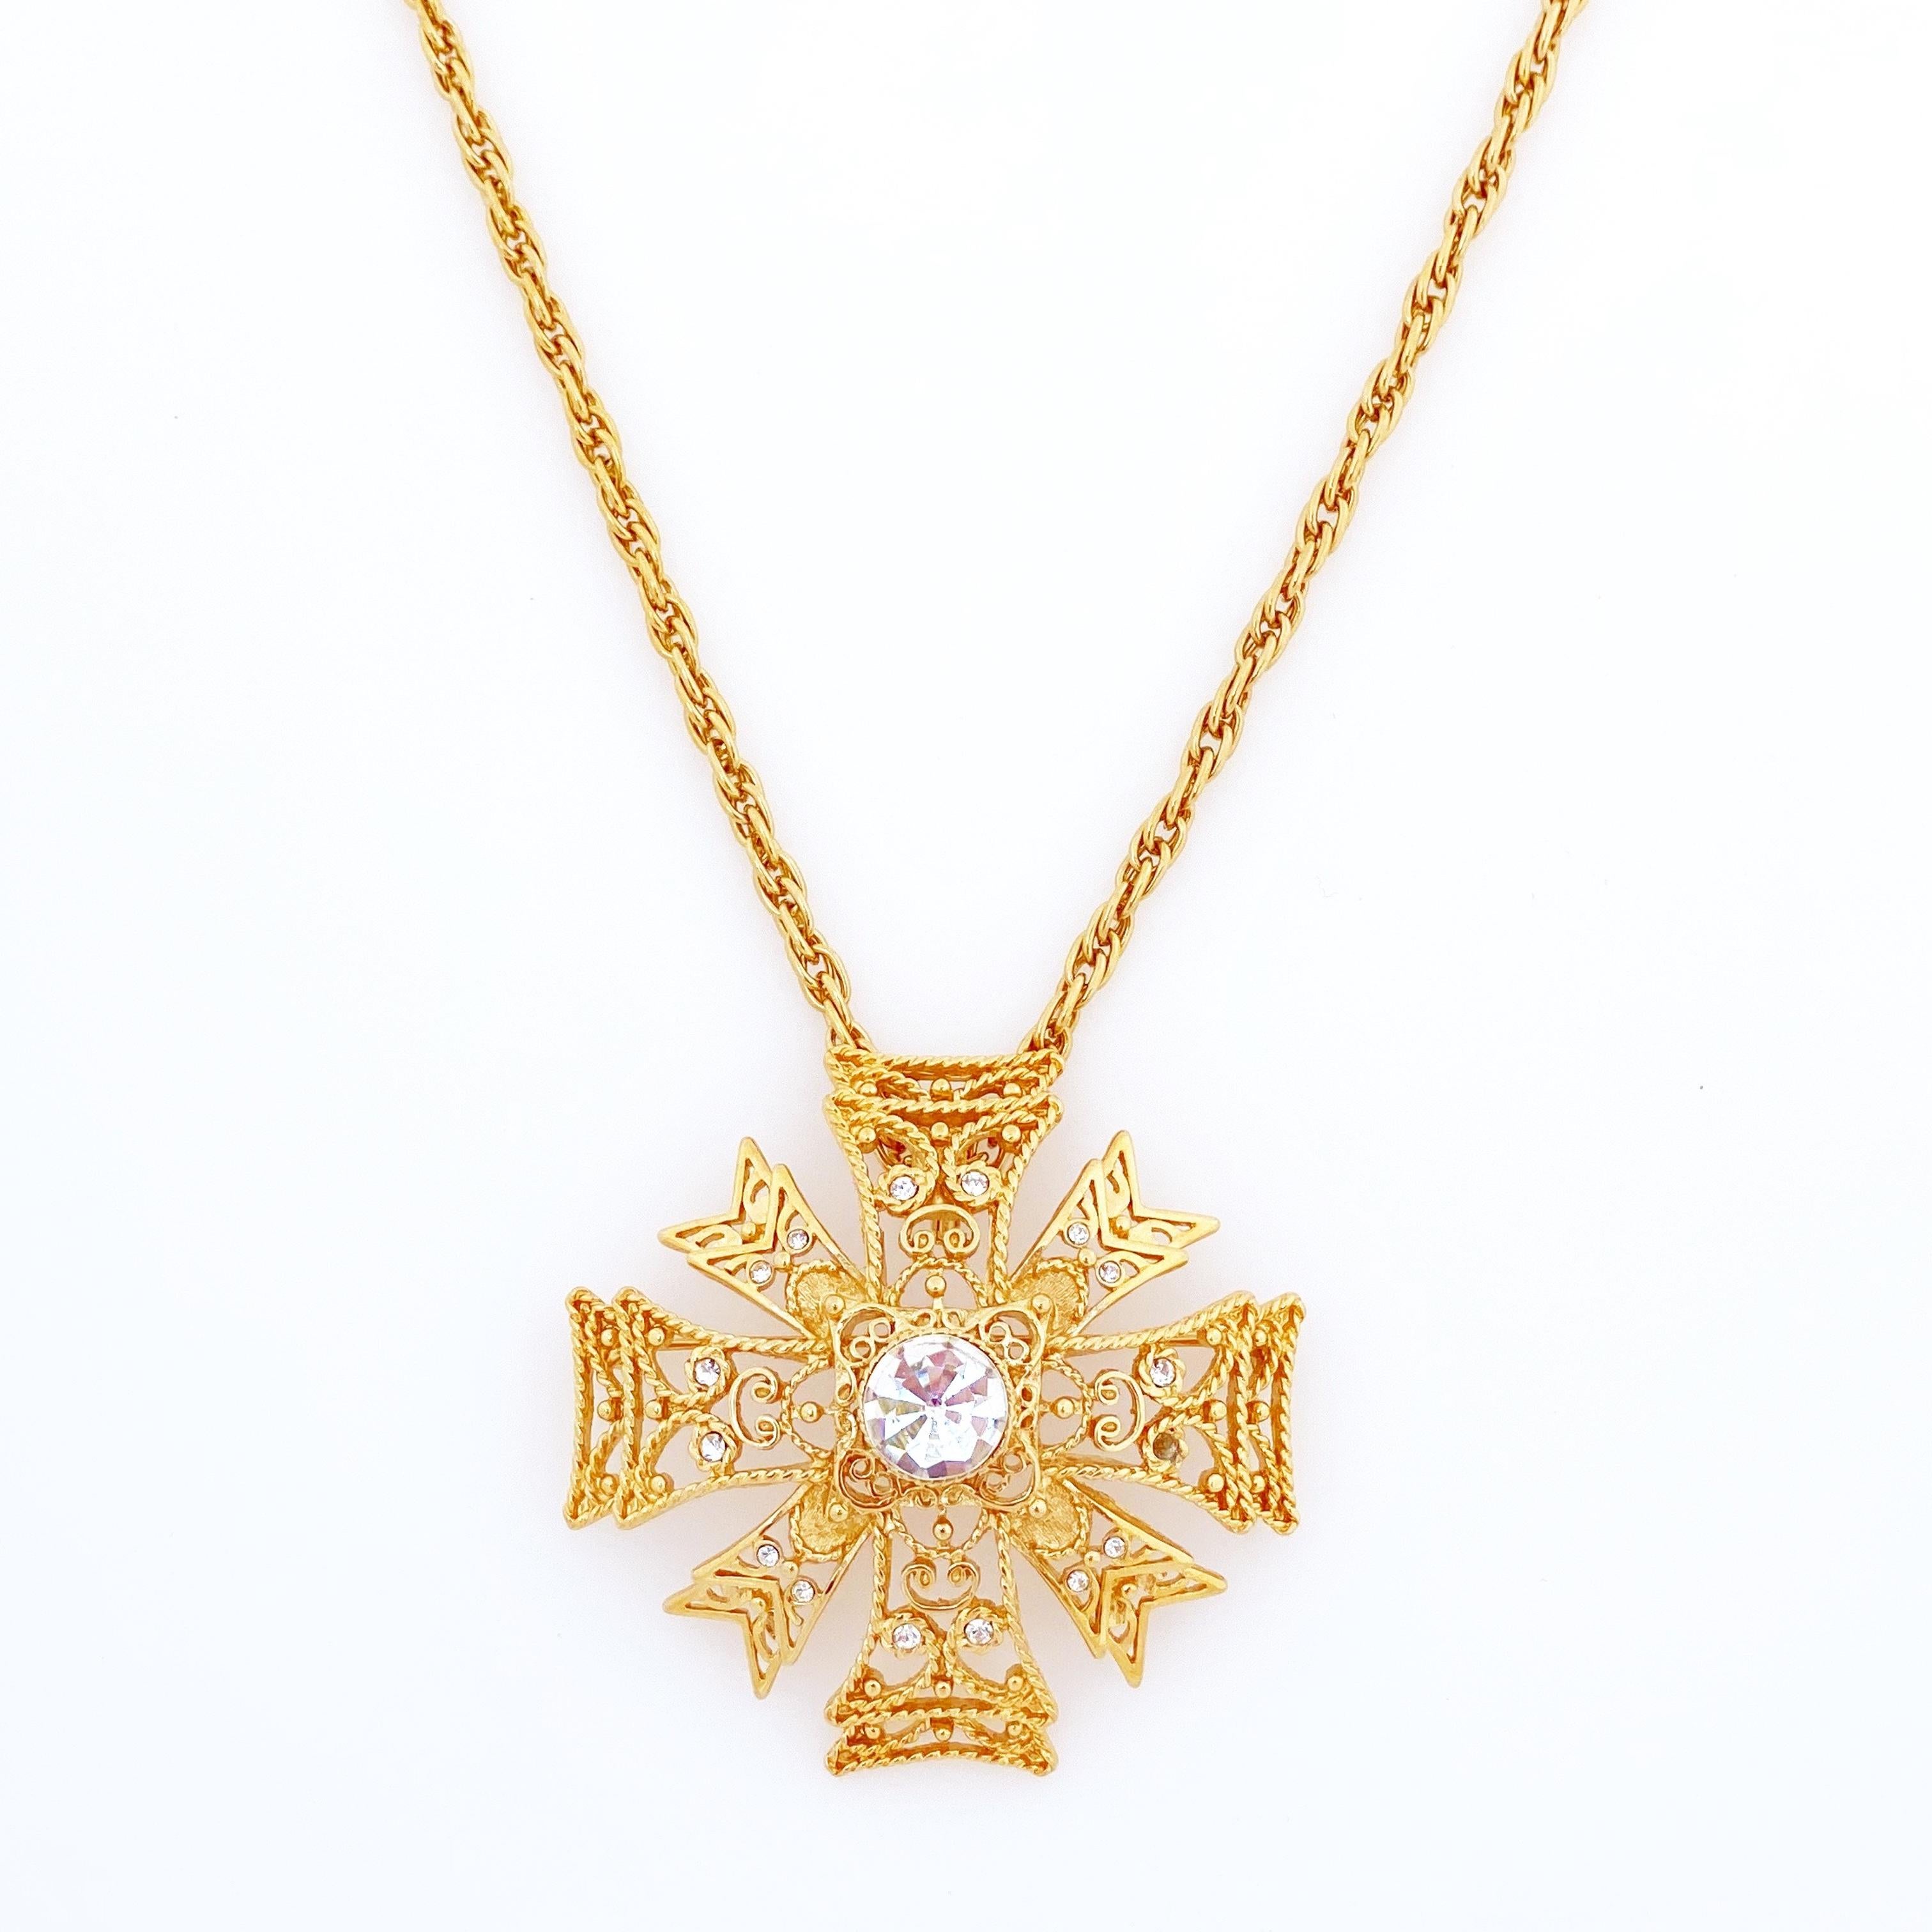 Modern Gold Maltese Cross Pendant Necklace By Kenneth Jay Lane, 1990s